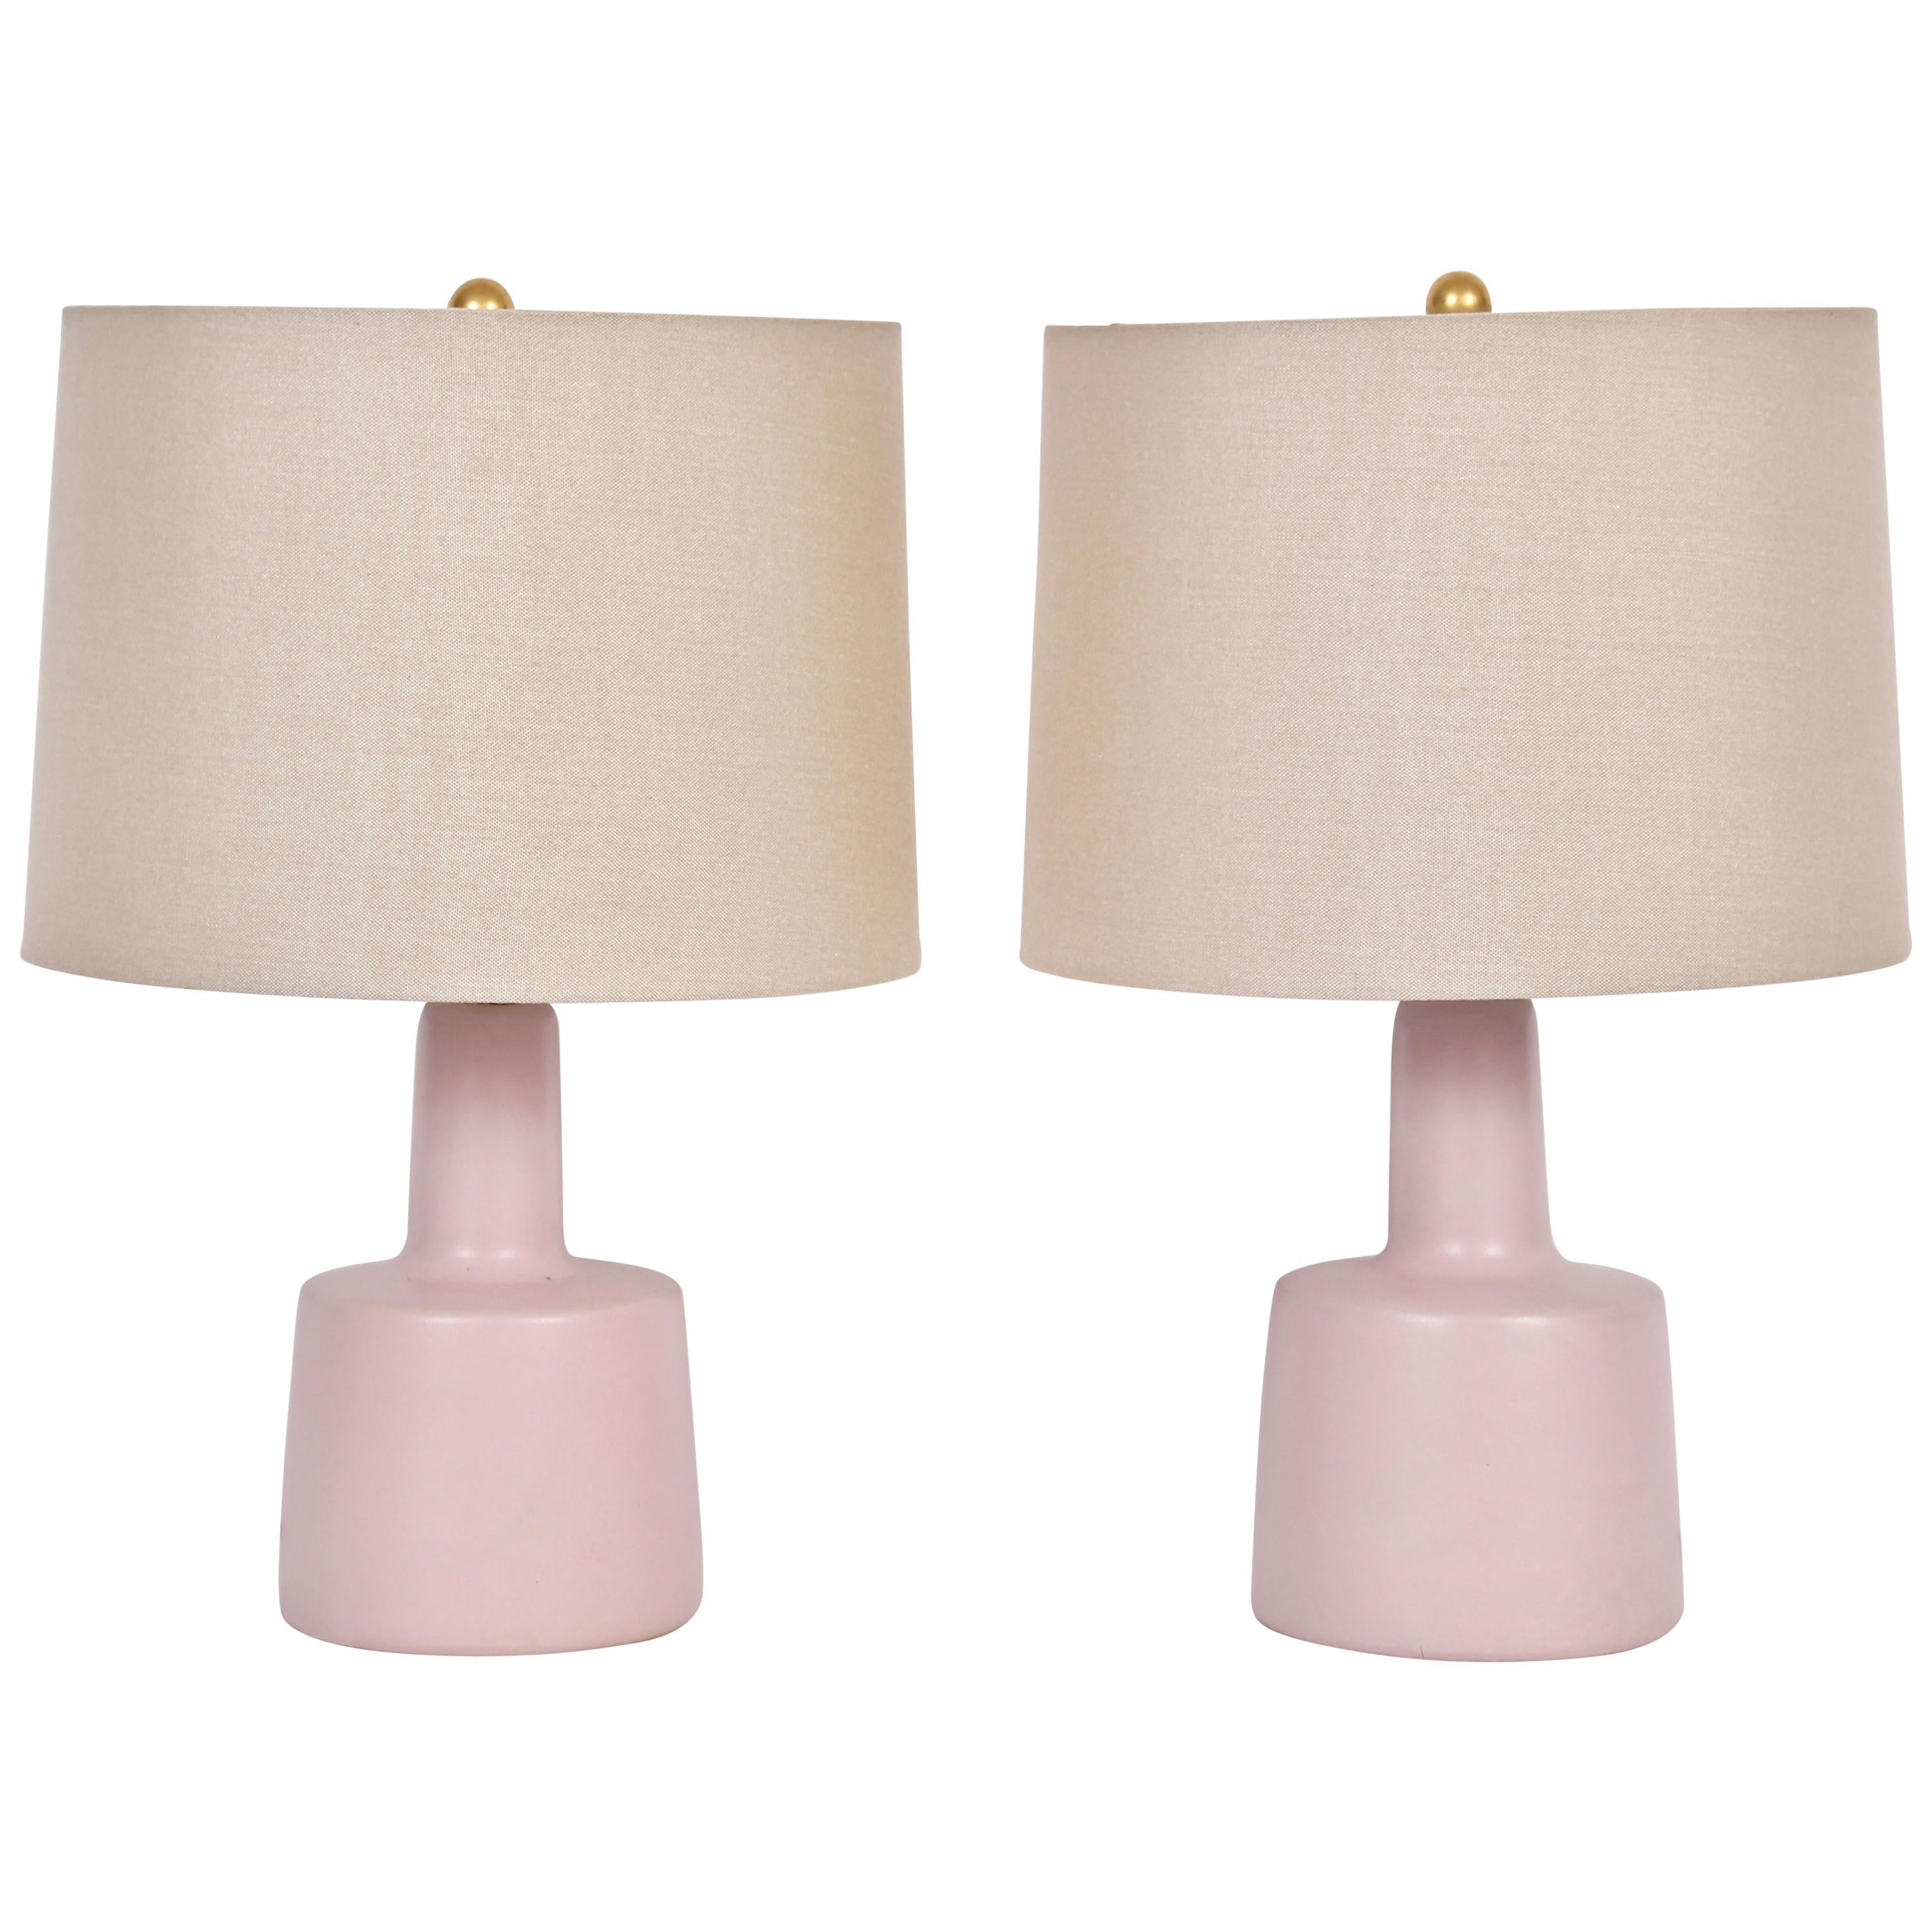 Jane & Gordon Martz for Marshall Studios Pair Dusty Rose Stoneware Bedside Lamps